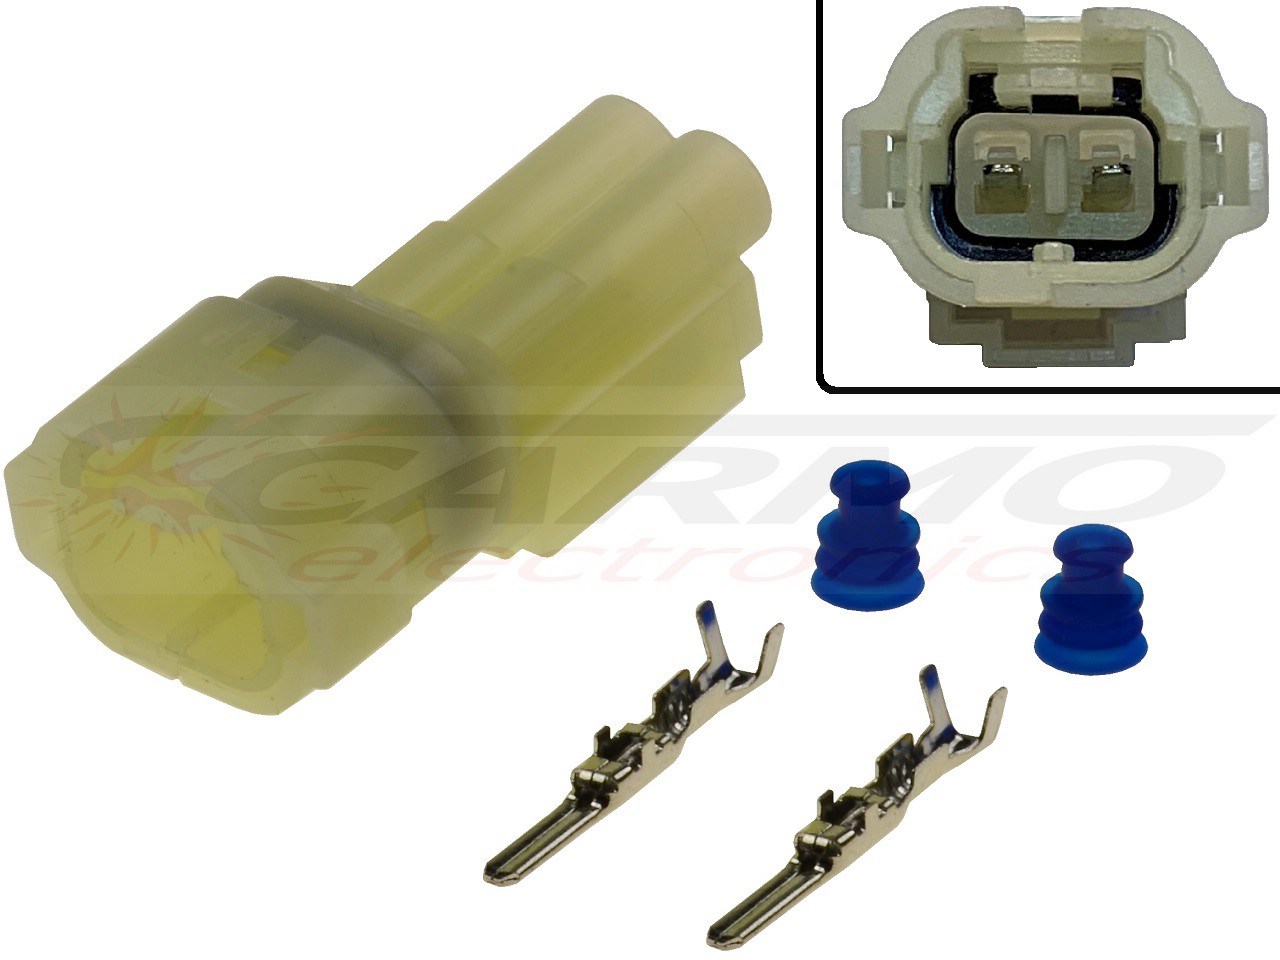 2 pole seal connector set (HM090 6187-2801, 6180-2451) - Click Image to Close